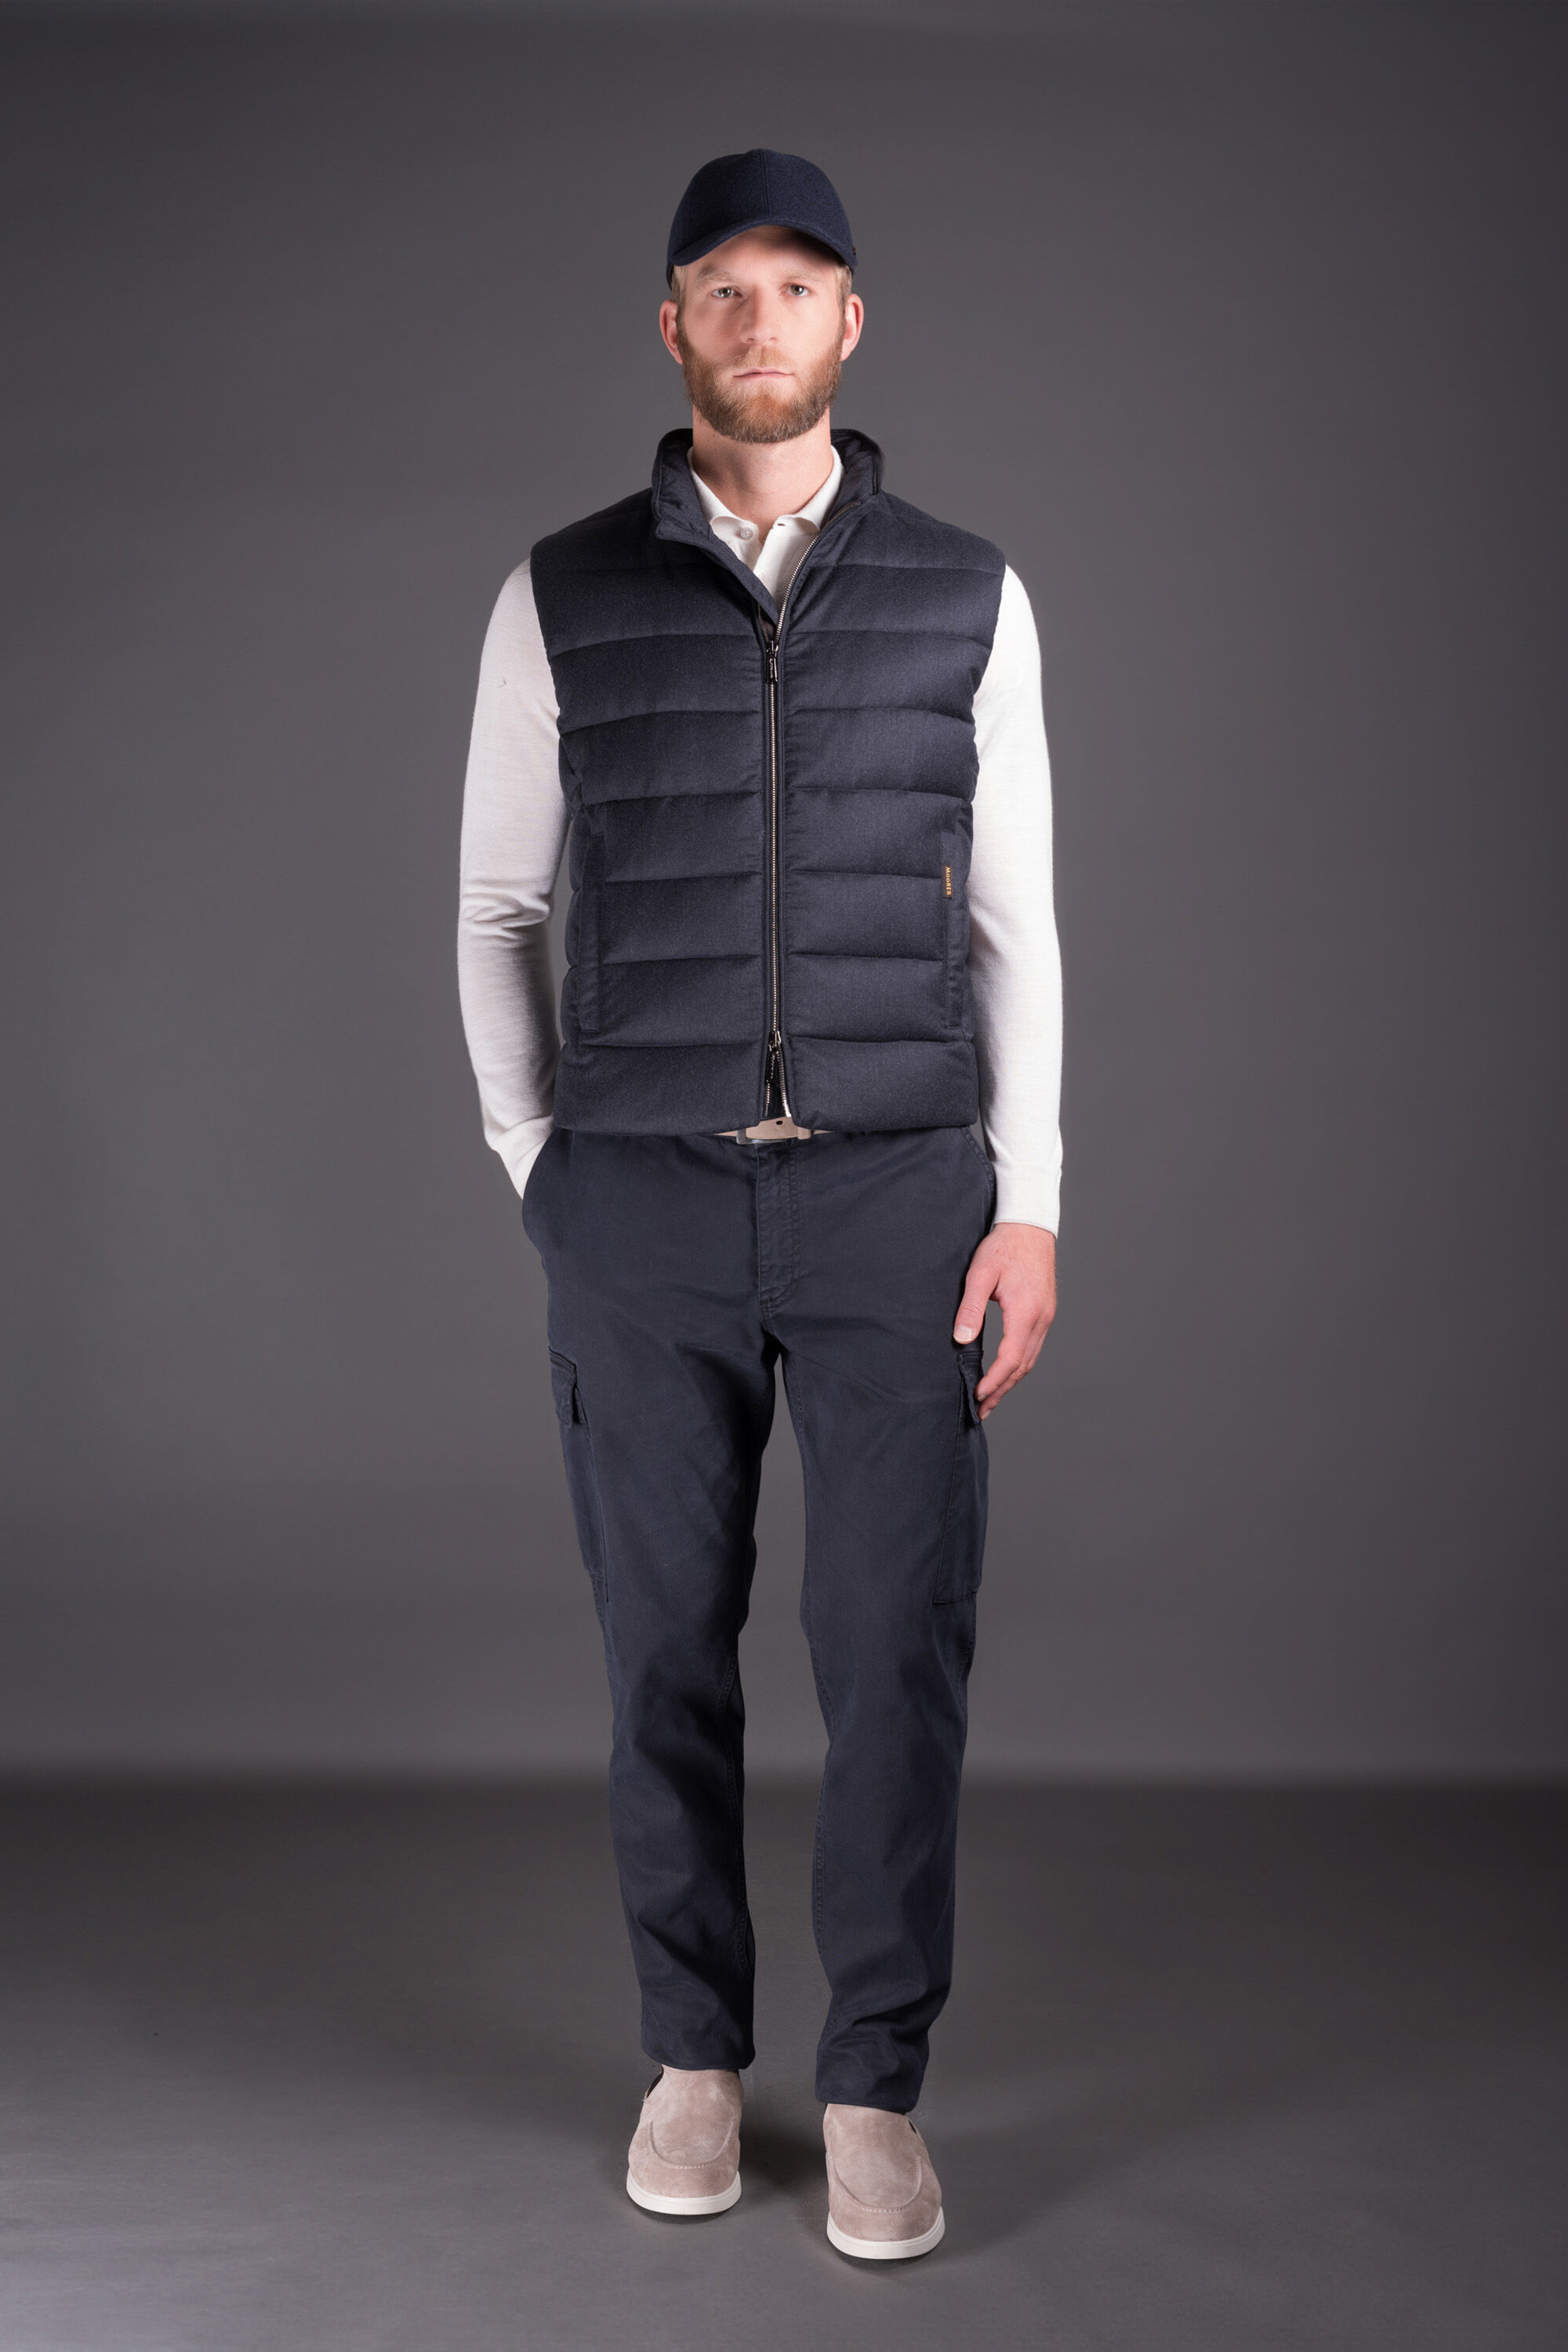 OLIVER-L in BLU GREY: Luxury Italian Vests | MooRER®